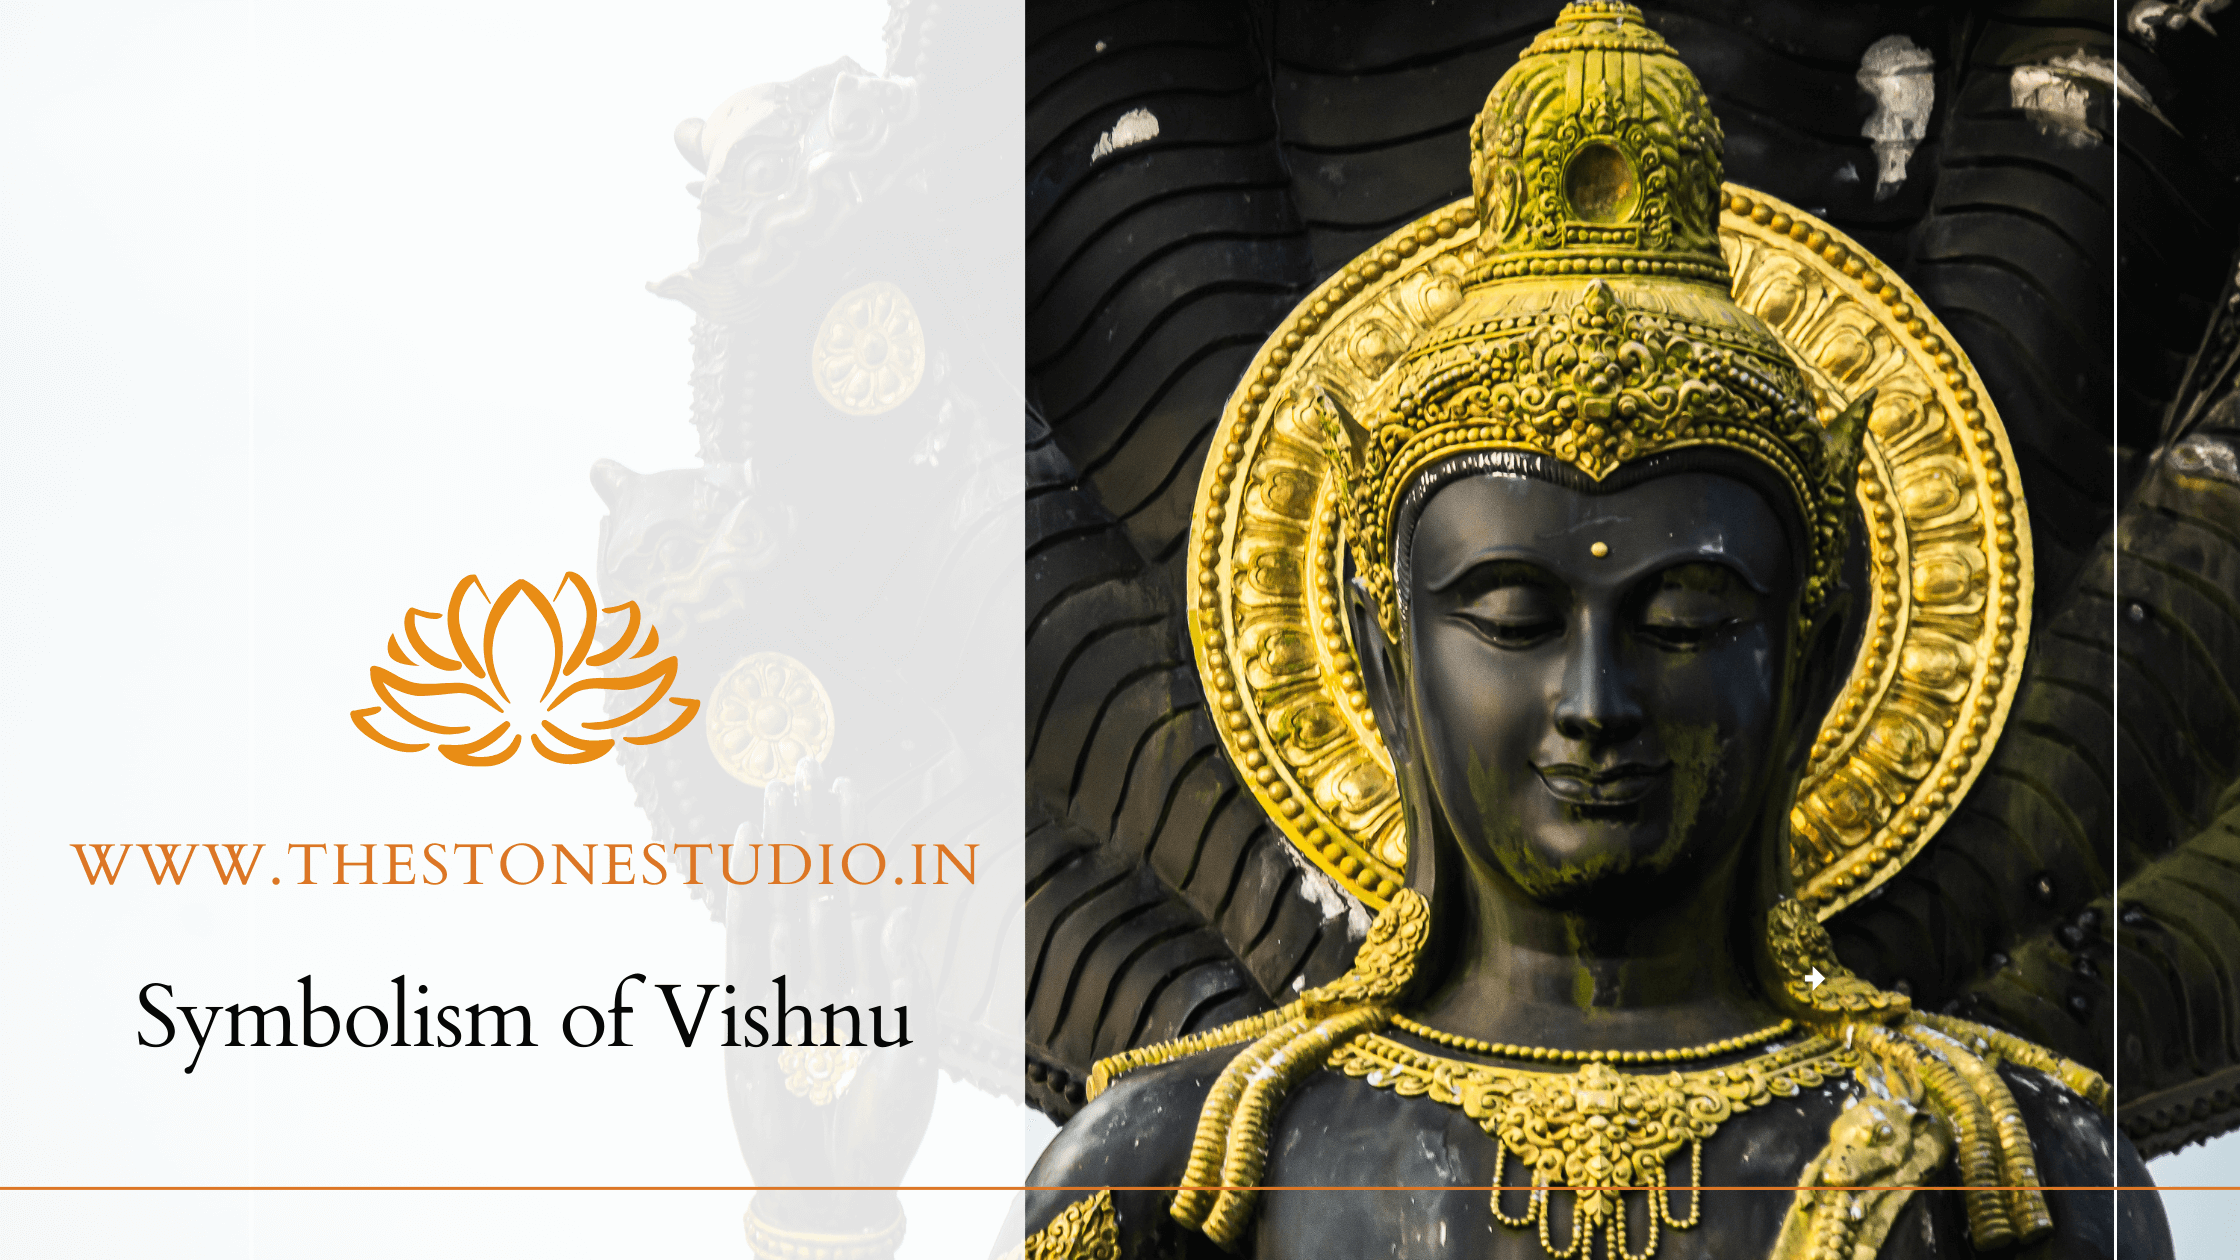 Lord Vishnu symbolism